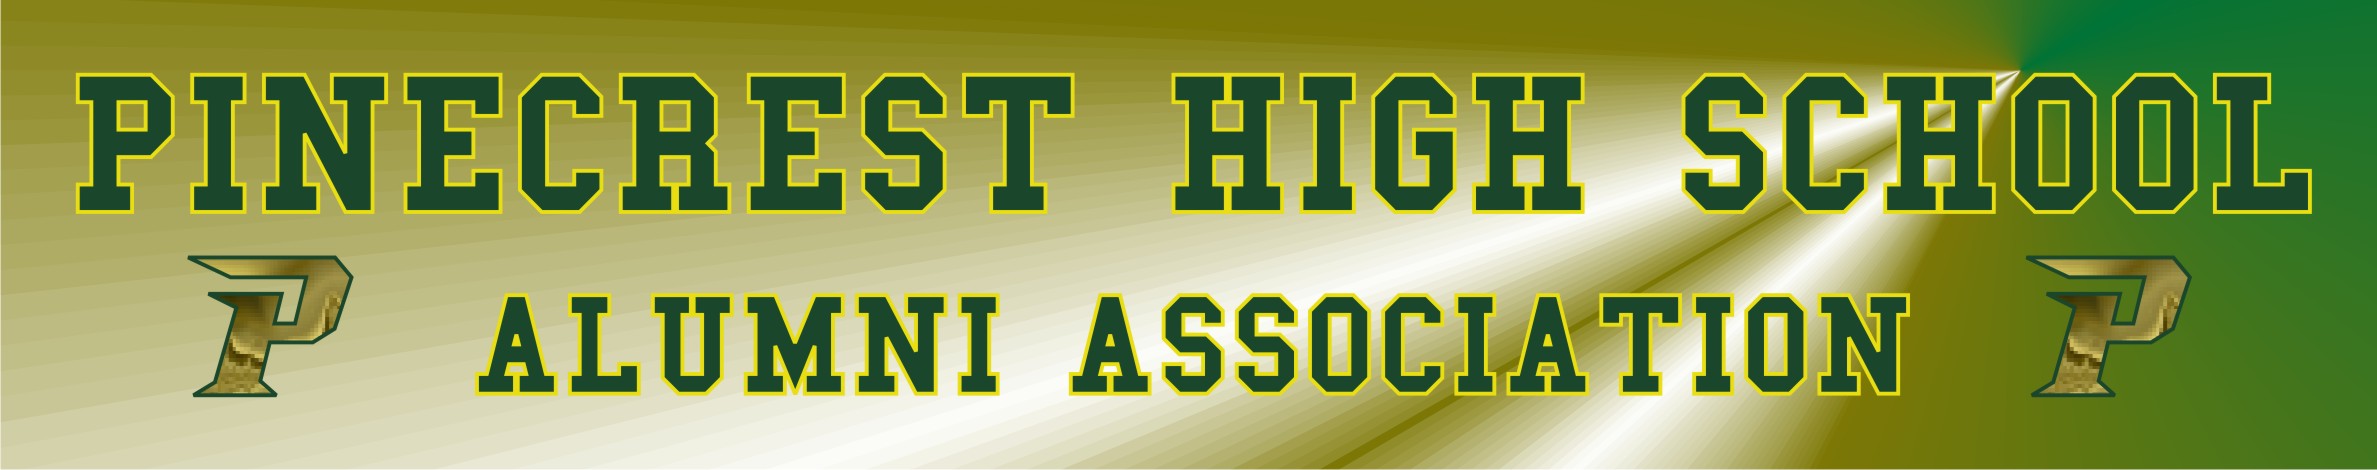 Pinecrest High School Alumni Association